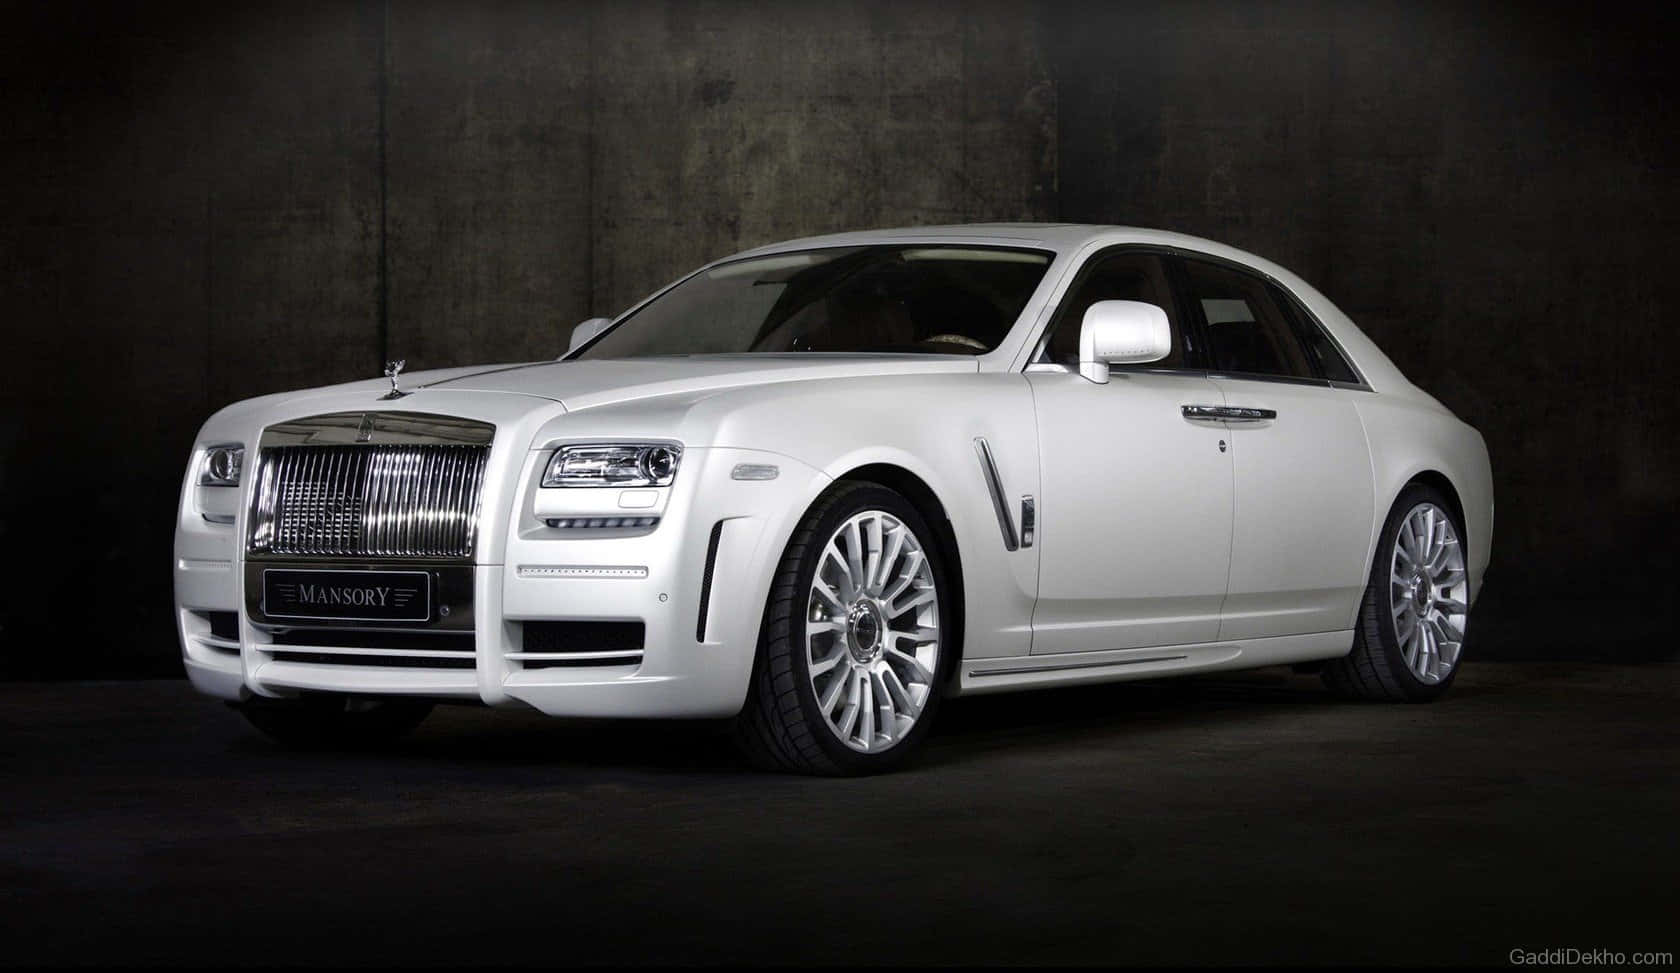 Caption: The Exquisite Luxury - Rolls Royce Ghost Wallpaper